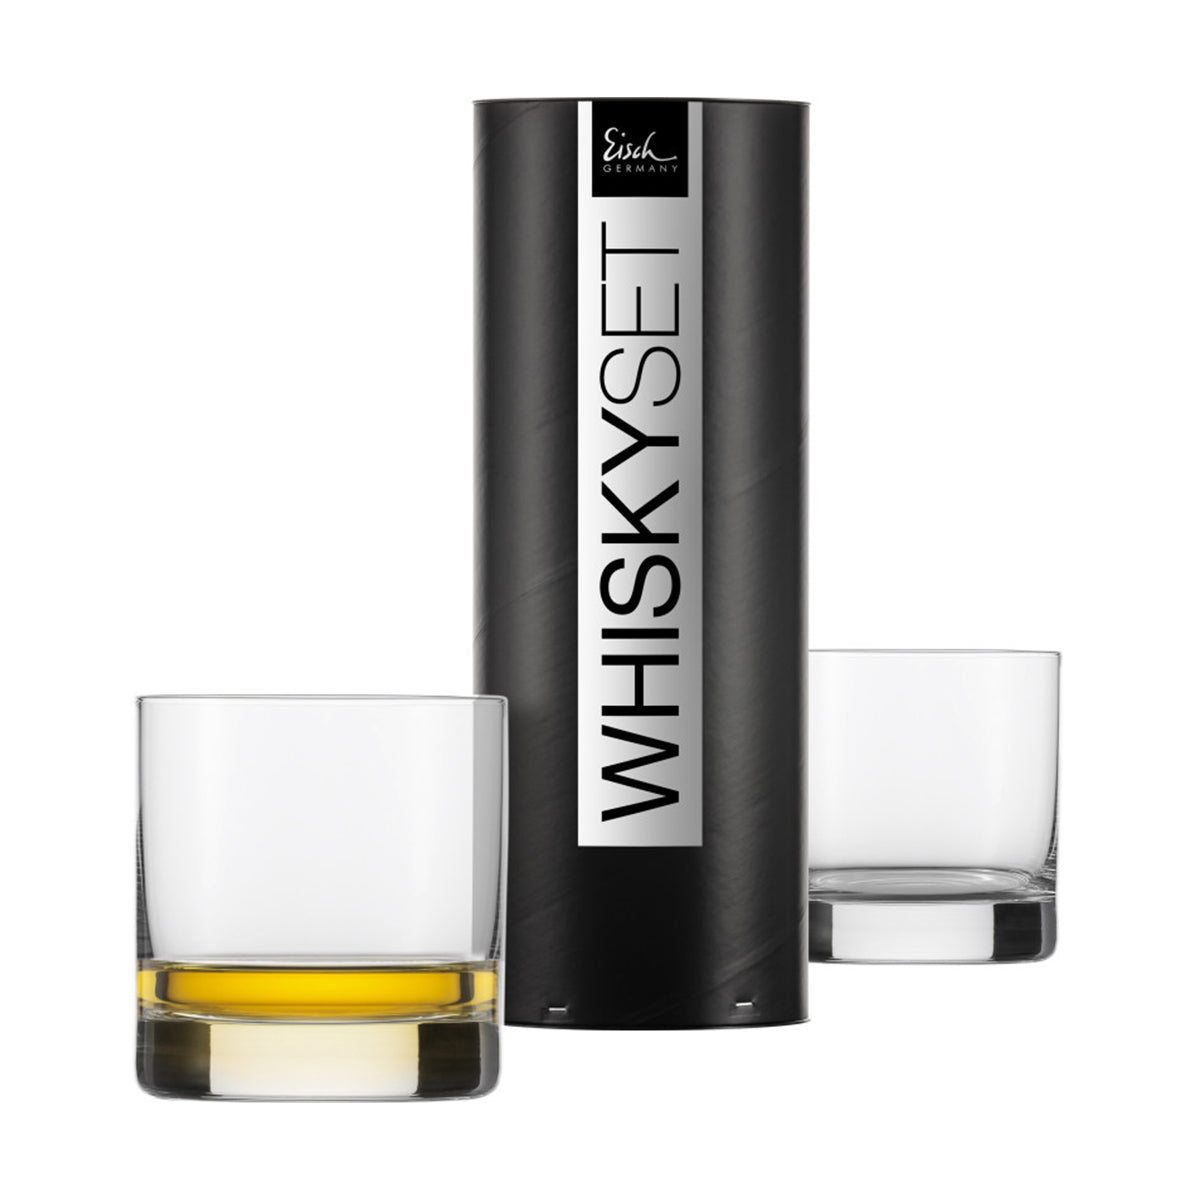 Gentleman Whisky Glass, Platinum